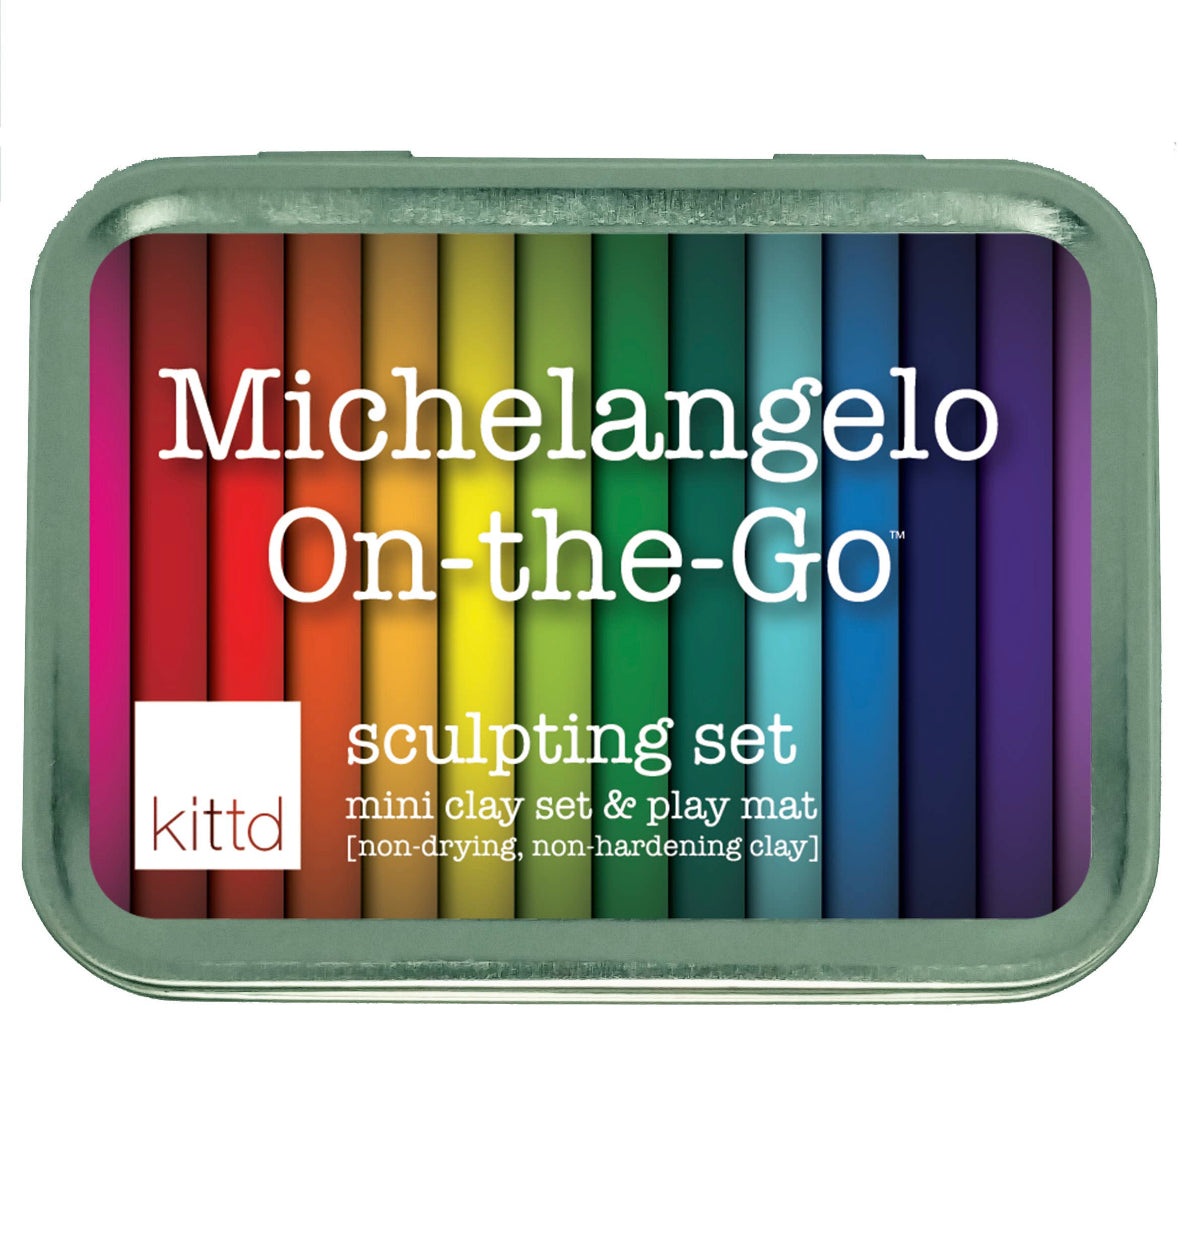 Michelangelo On-the-Go Sculpting Set